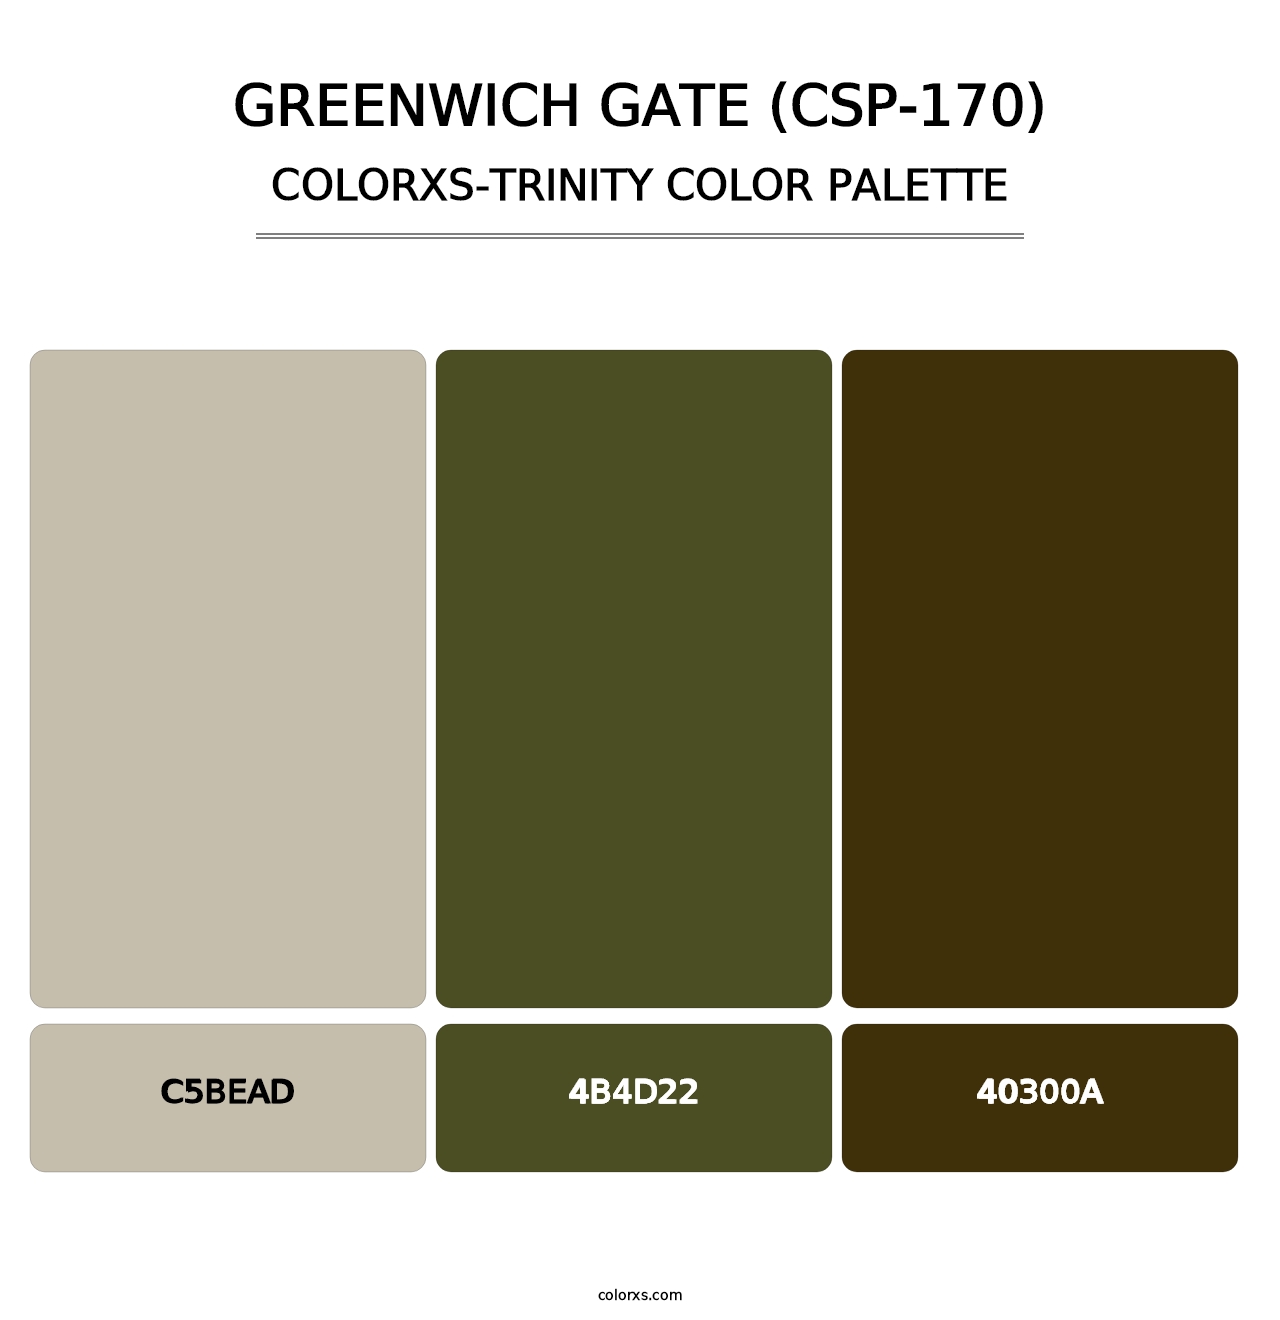 Greenwich Gate (CSP-170) - Colorxs Trinity Palette